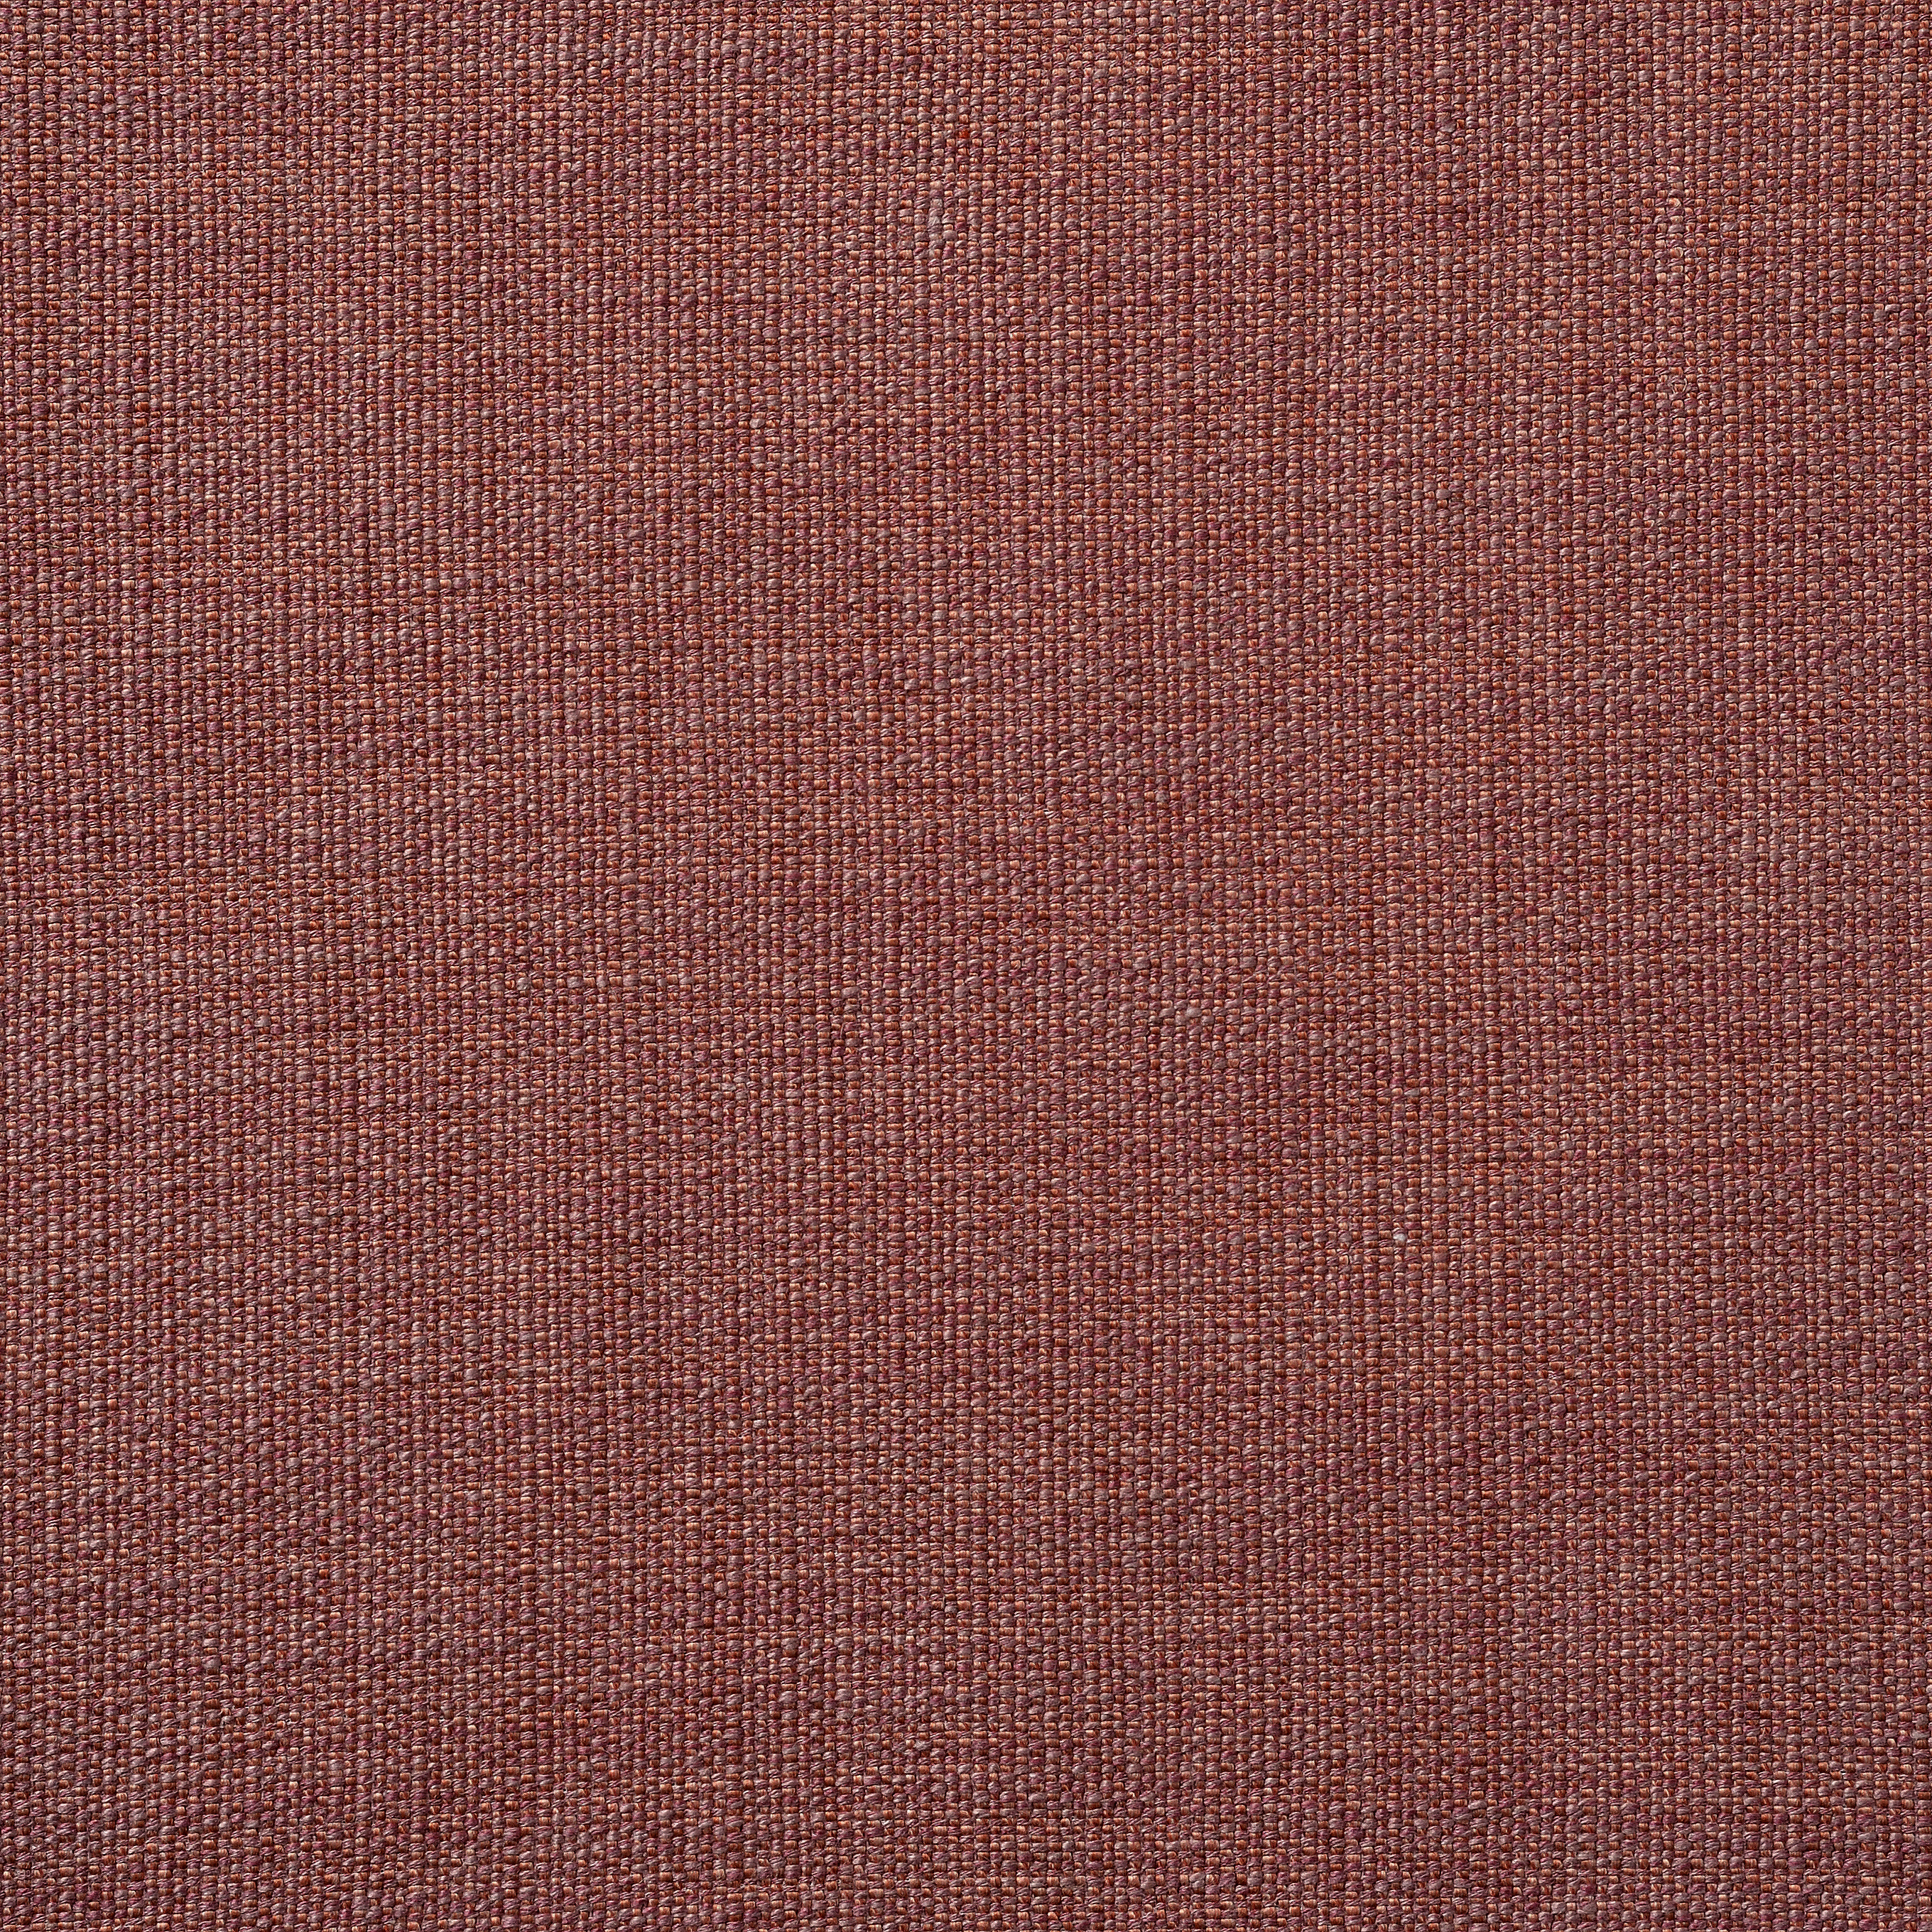 Talbot Rustic Weave - Blush Marl